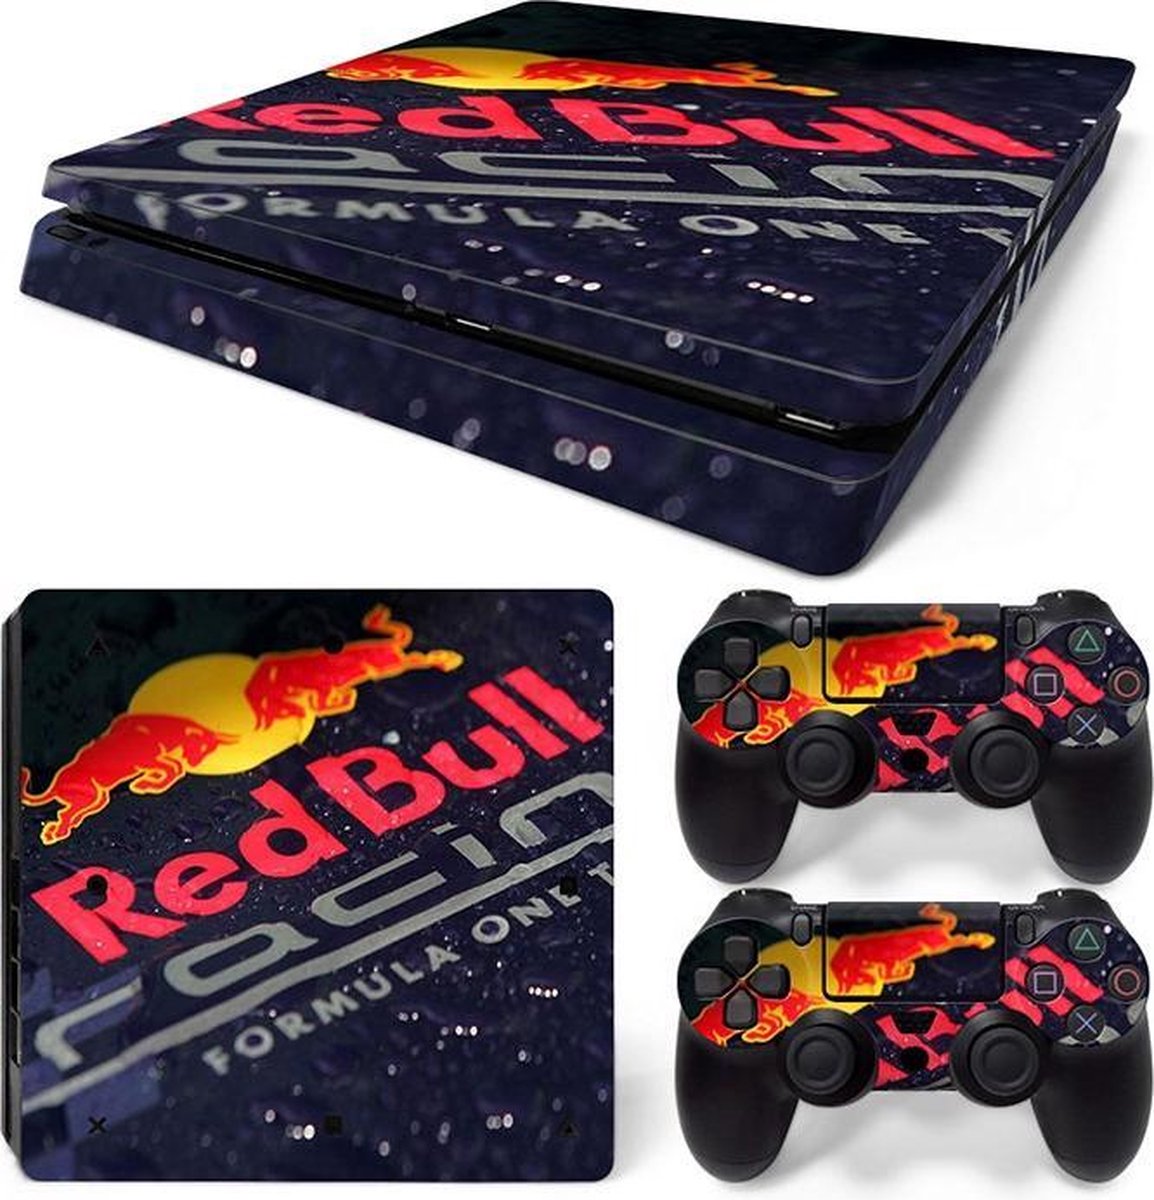 udpege Link supplere Red Bull Racing- PS4 Slim skin | bol.com